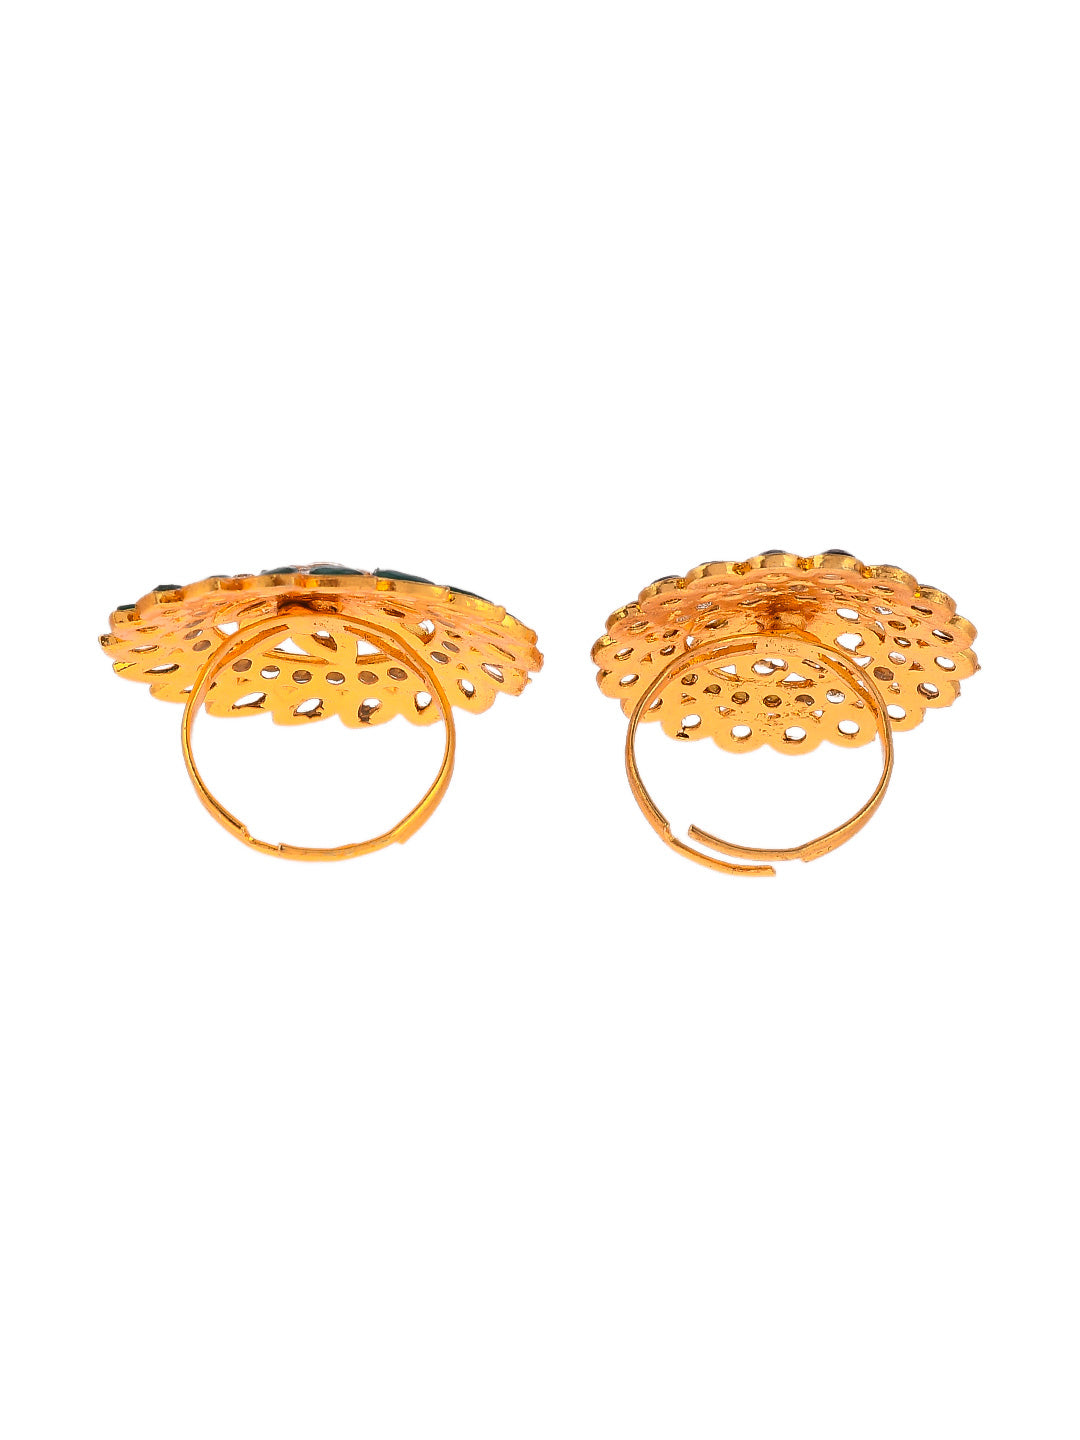 Set of 2 Gold Plated Kundan Meenakari Adjustable Wedding Finger Ring for Women